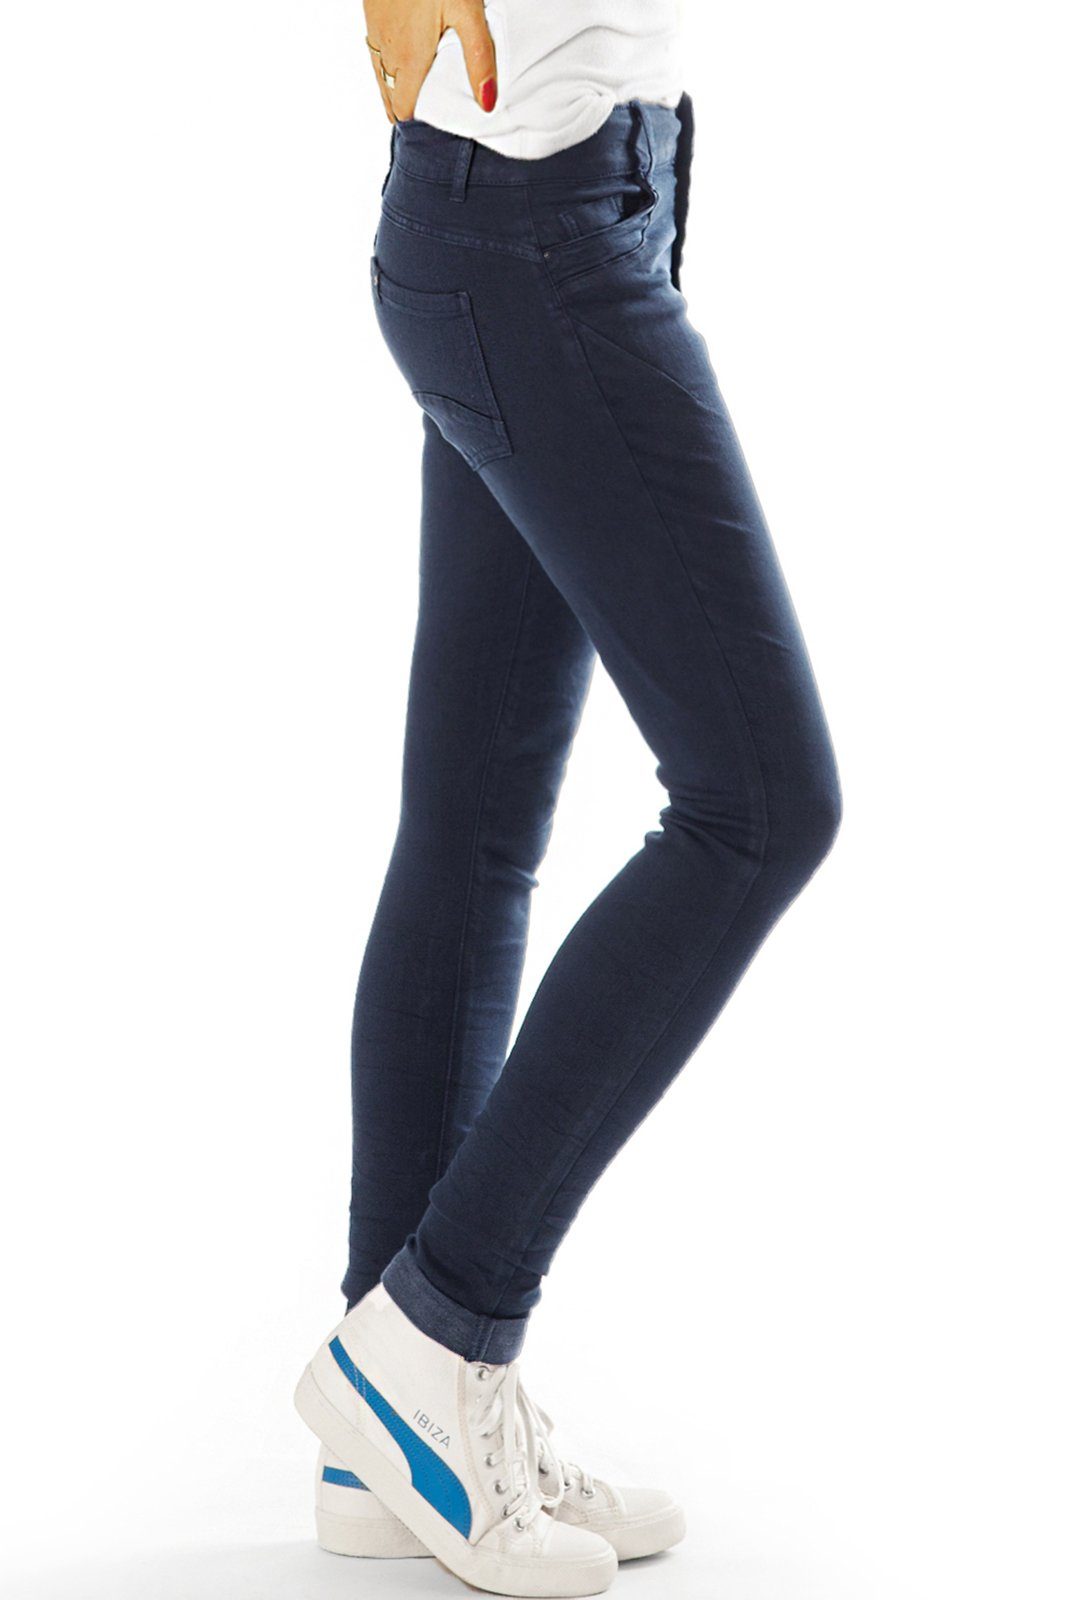 langer be styled waist - eng, blau hüftig Röhrenjeans Damen - skinny, Knopfleiste Jeanshose Stretch-Anteil, j41g low Röhrige low mit 5-Pocket-Style, mit waist,